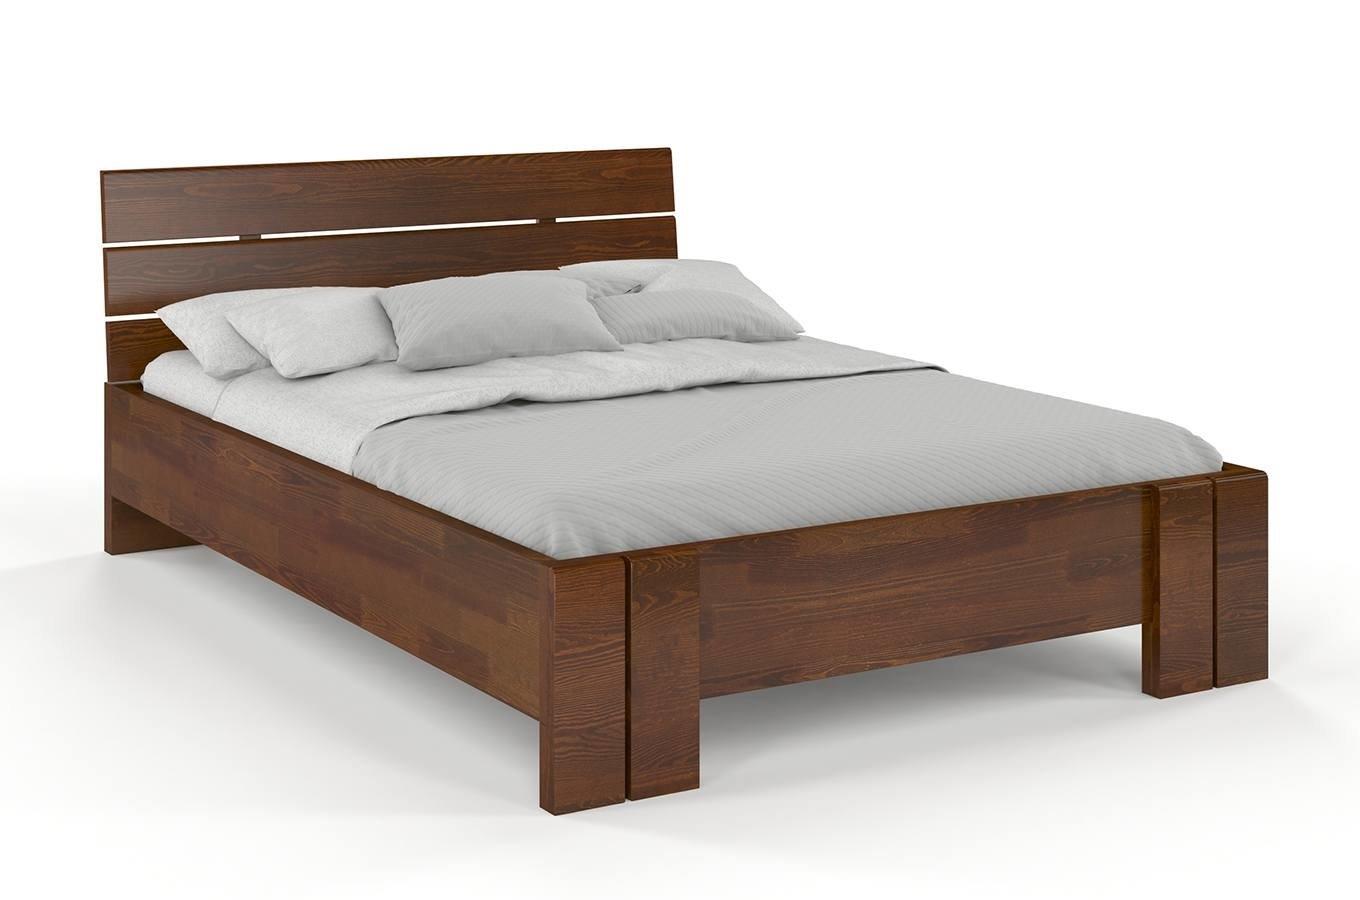 Łóżko drewniane sosnowe Visby Arhus High & Long (długość + 20 cm) / 160x220 cm, kolor orzech